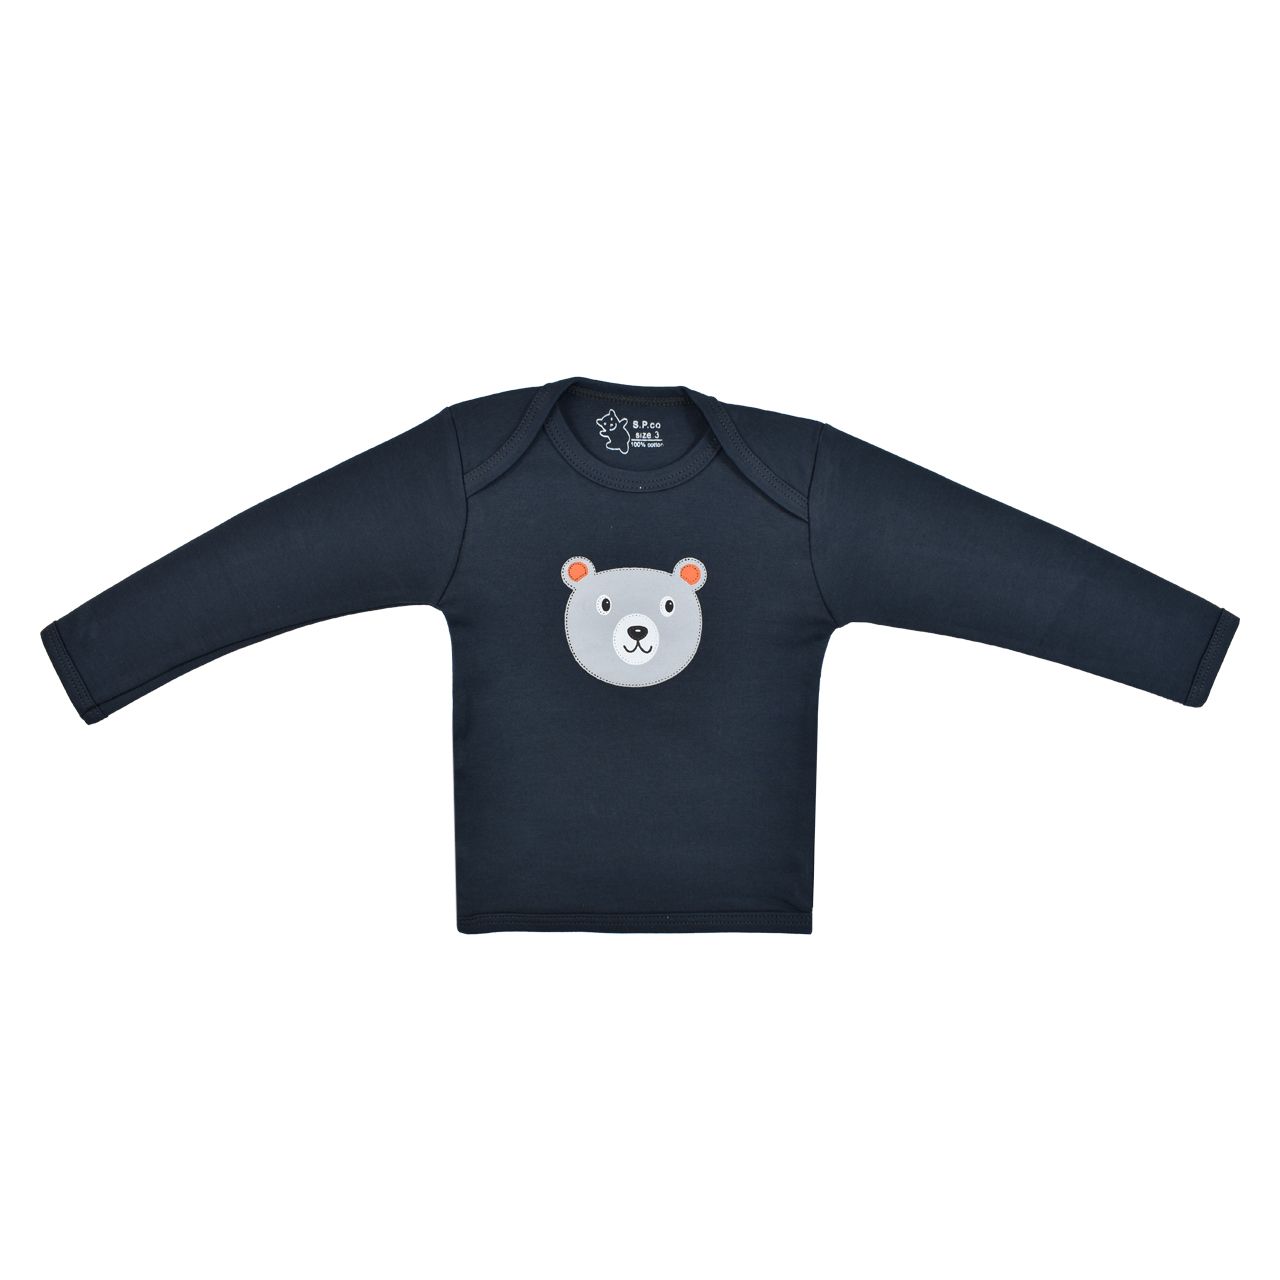 تی شرت آستین بلند نوزادی اسپیکو مدل خرس -  - 1